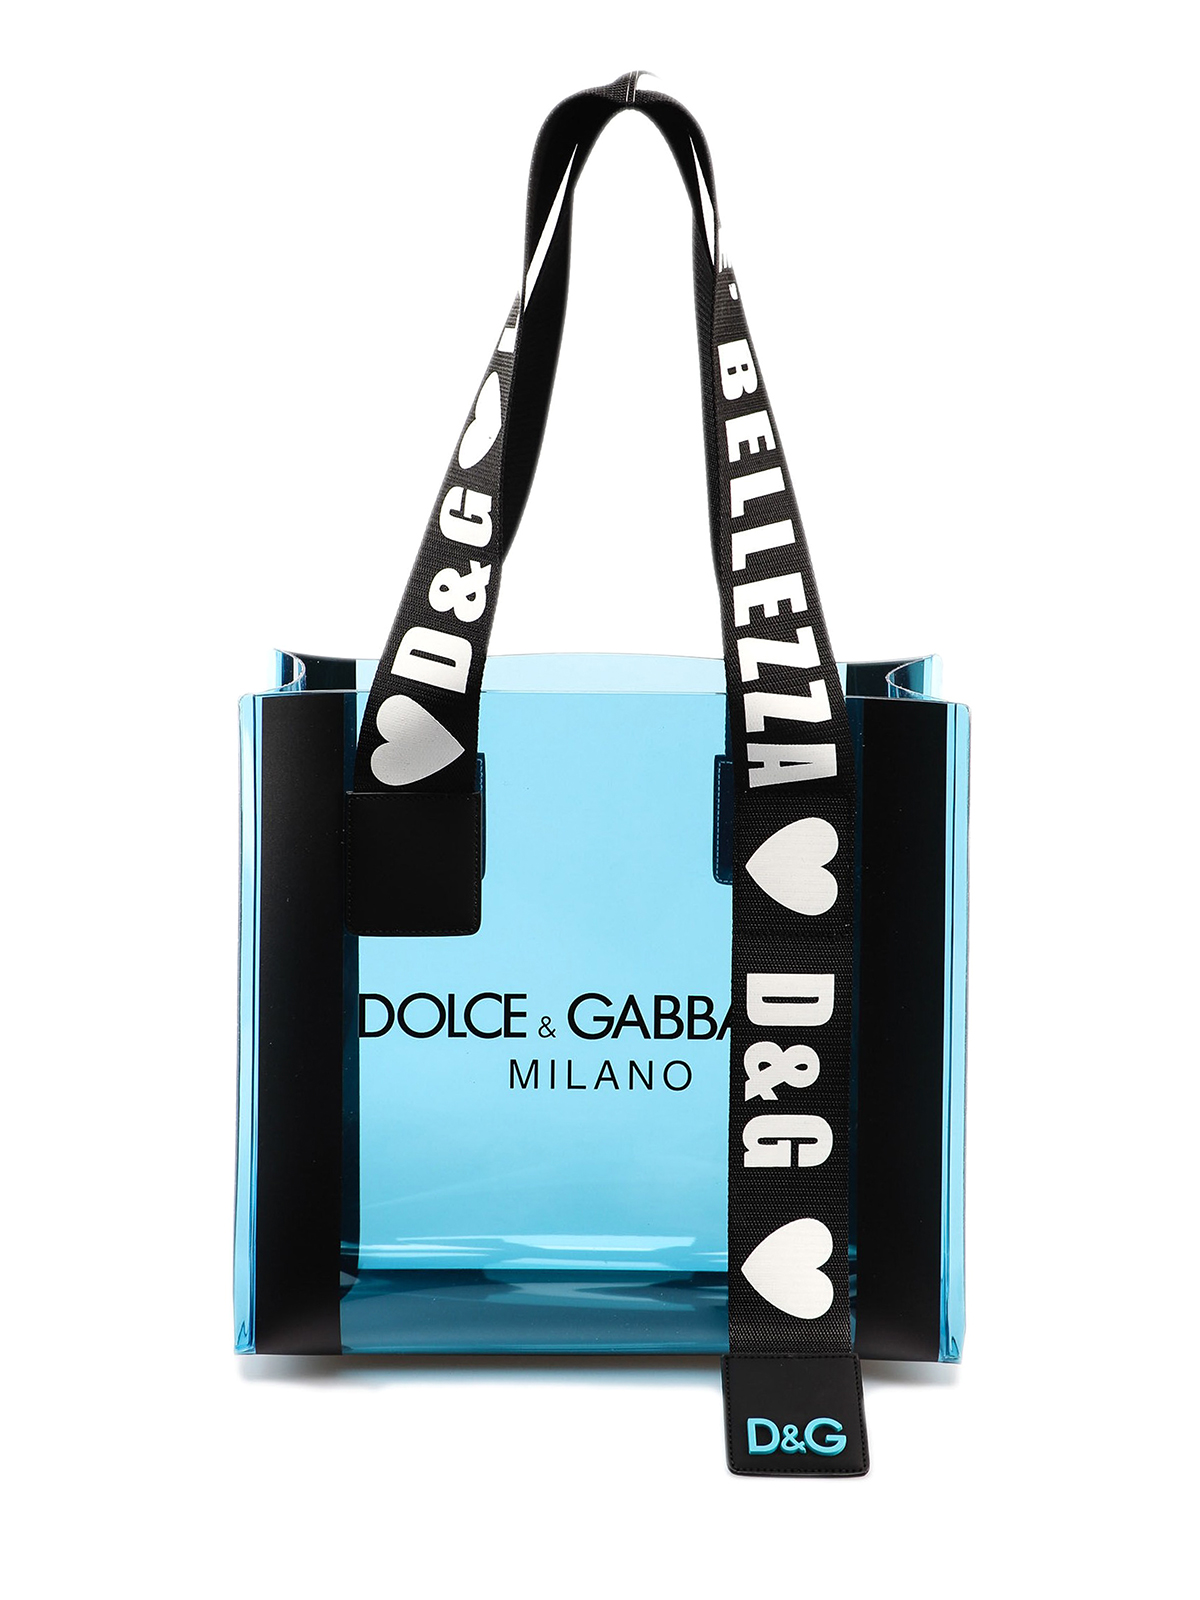 Dolce & Gabbana Light Blue Beach Bag White Tote Shopper